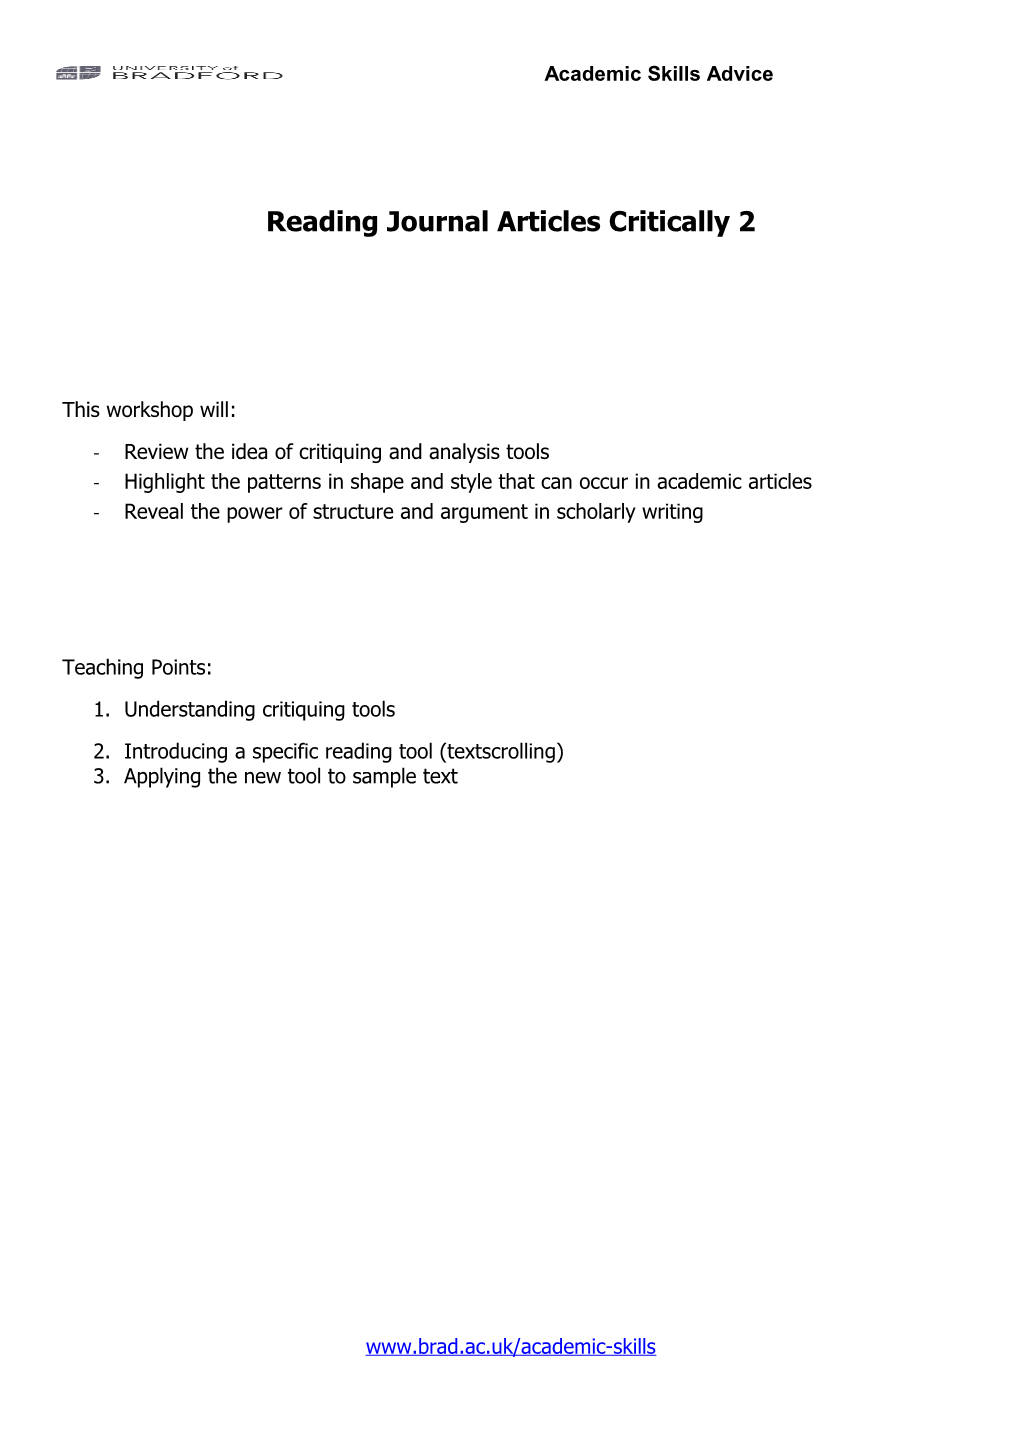 Reading Journal Articlescritically 2